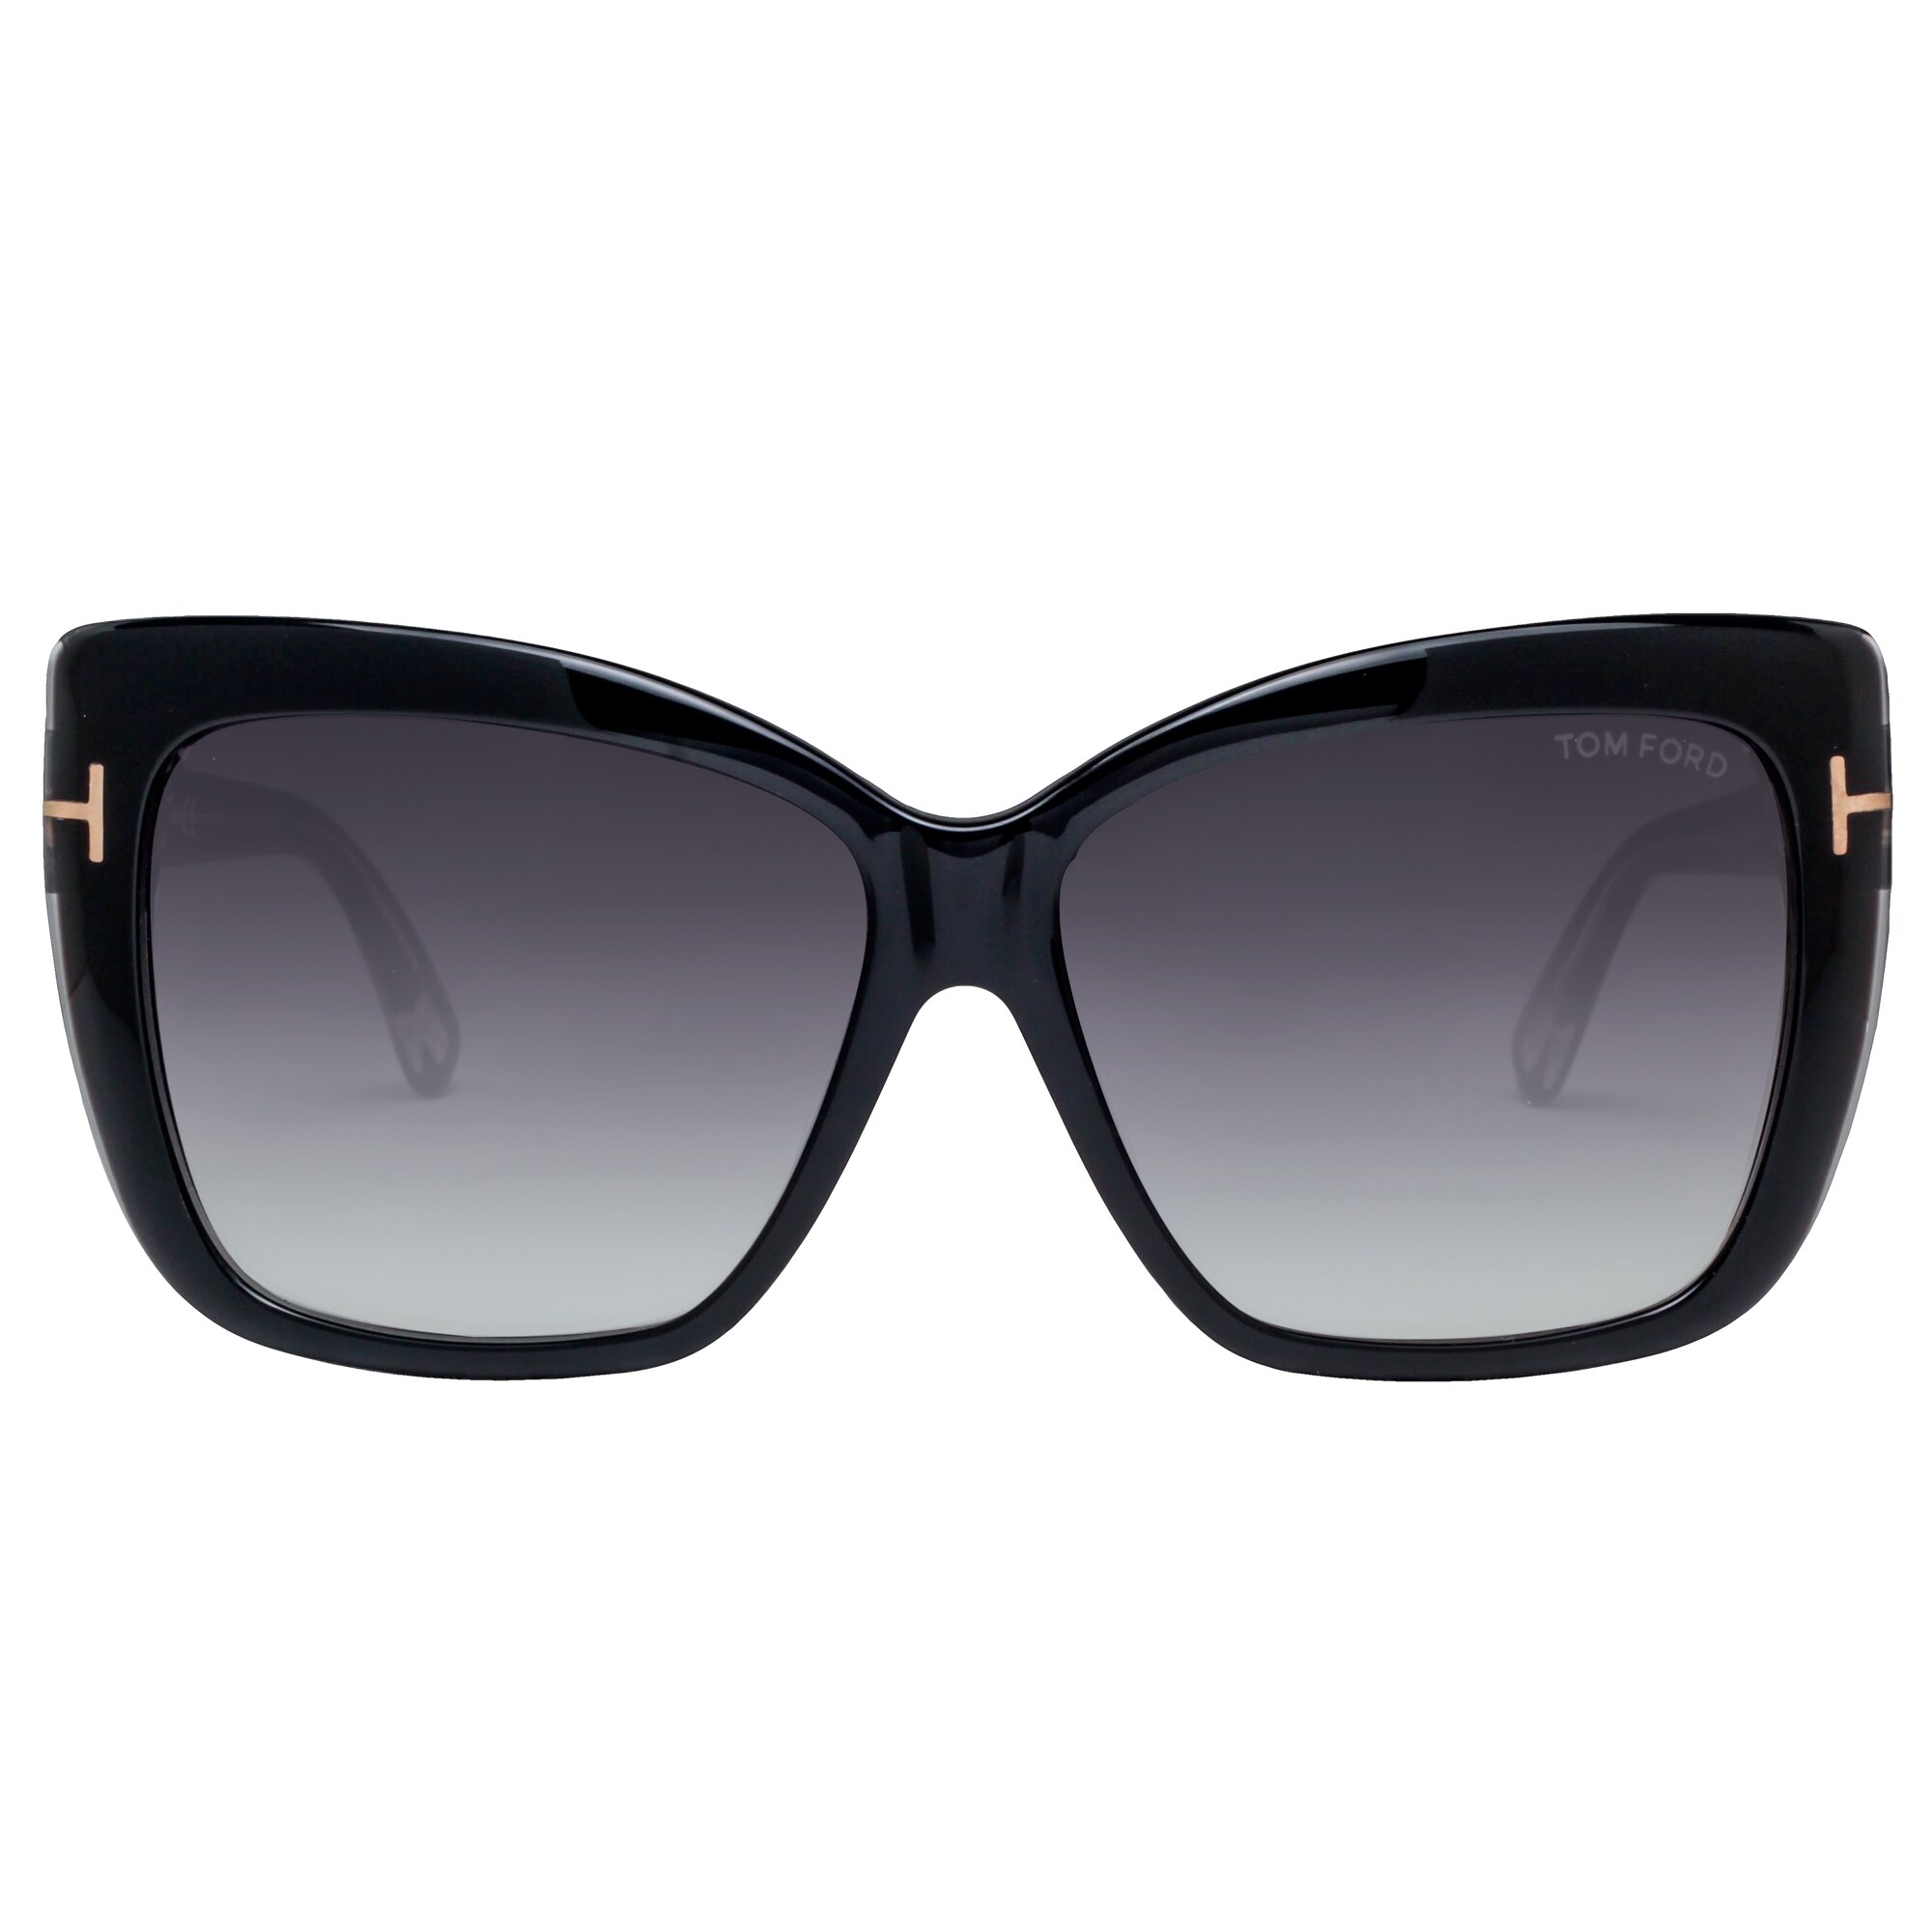 Tom Ford Irina Tf390 01b 59mm Black Grey Gradient Women S Butterfly Sunglasses Black 59mm 13mm 140mm Overstock